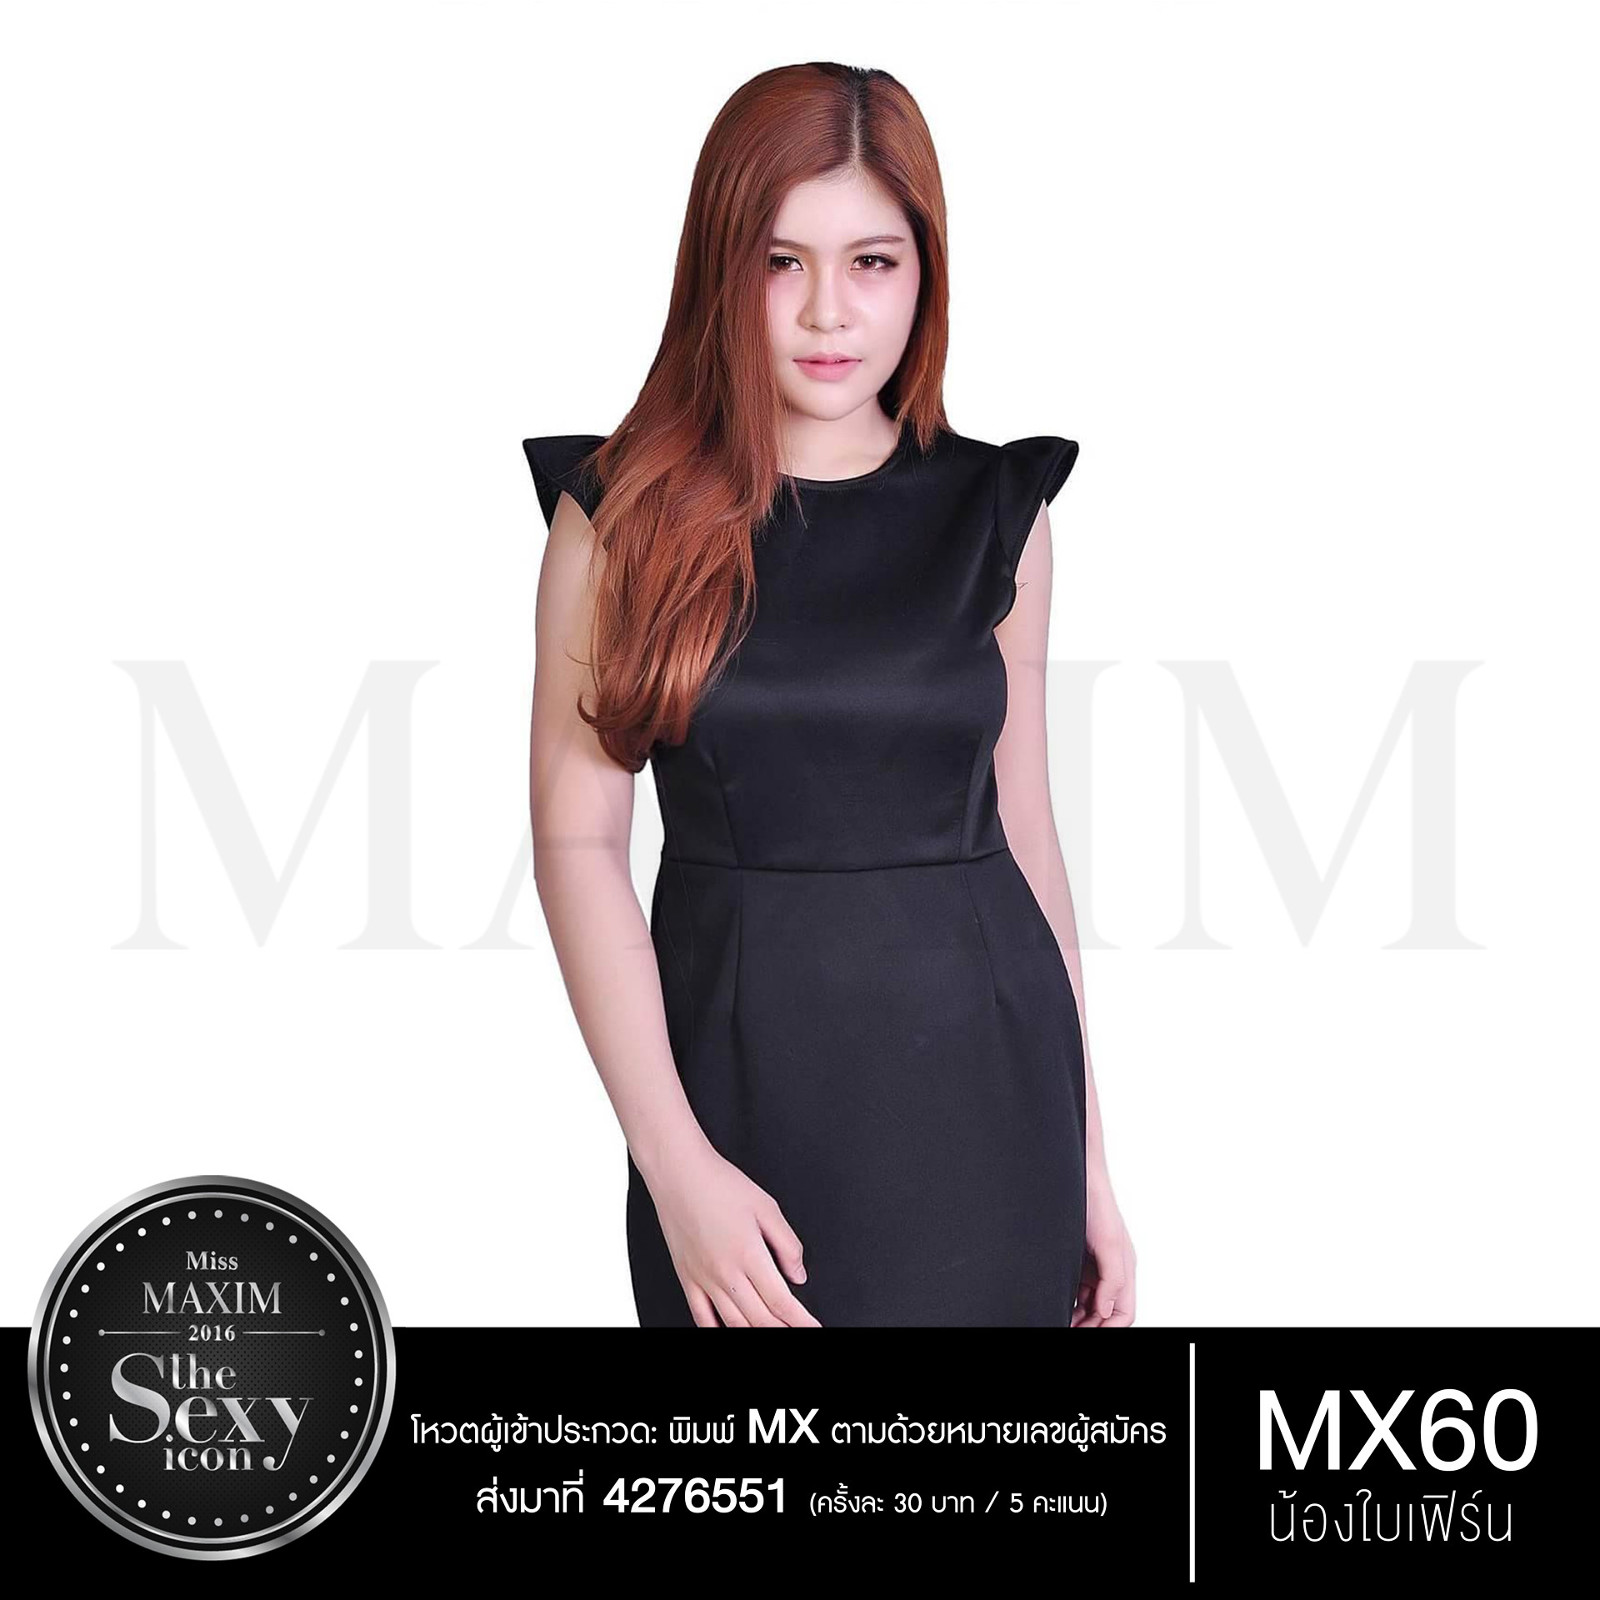 MX60 น้องใบเฟิร์น ผู้สมัคร Miss Maxim 2016 : The S